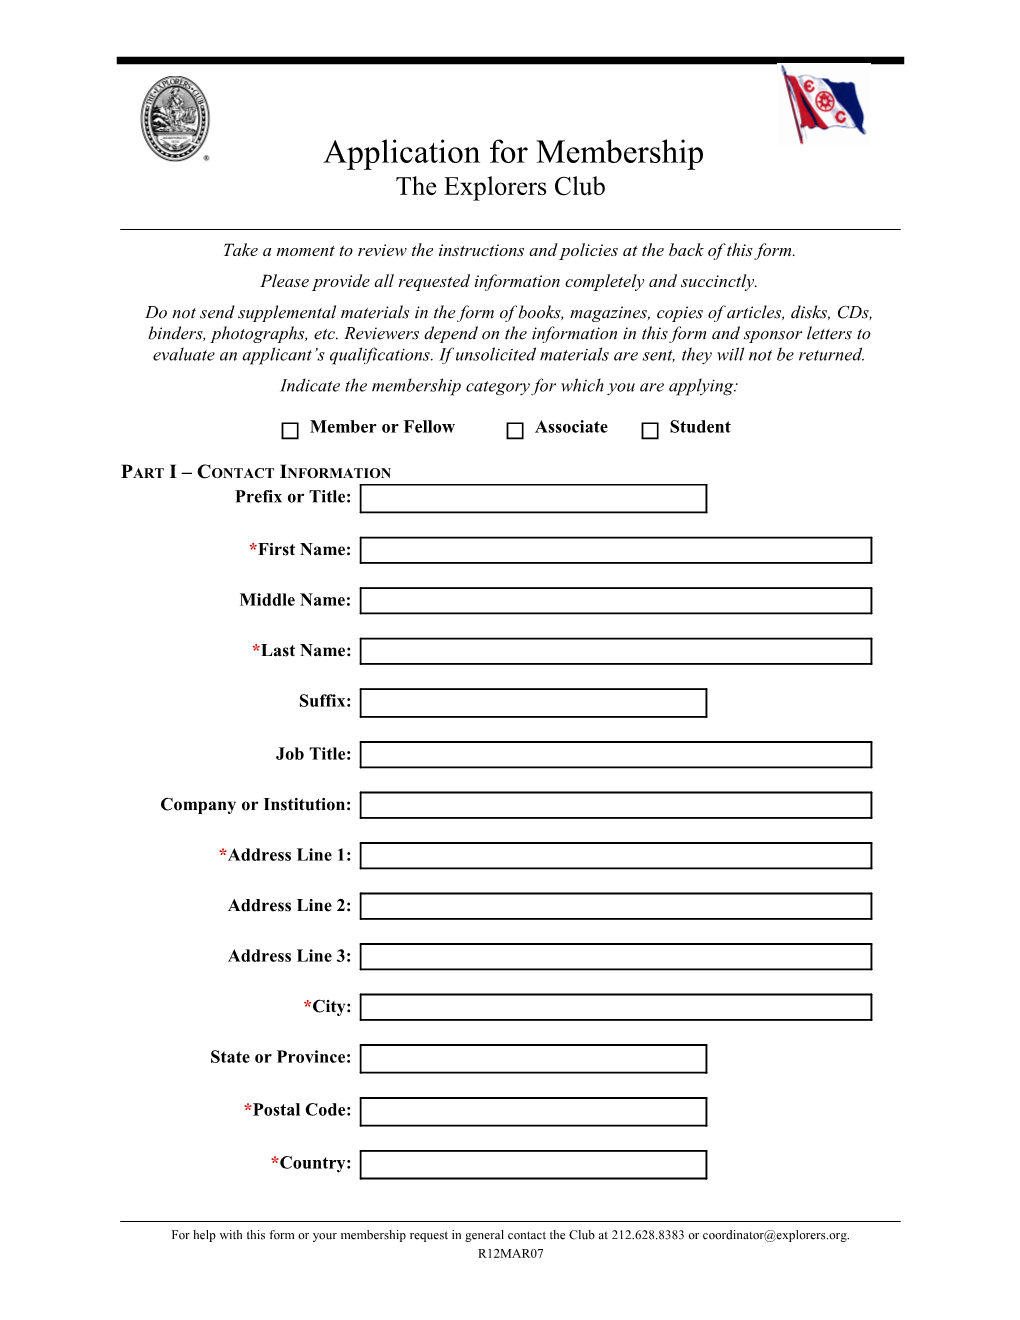 Explorers Club Membership Application